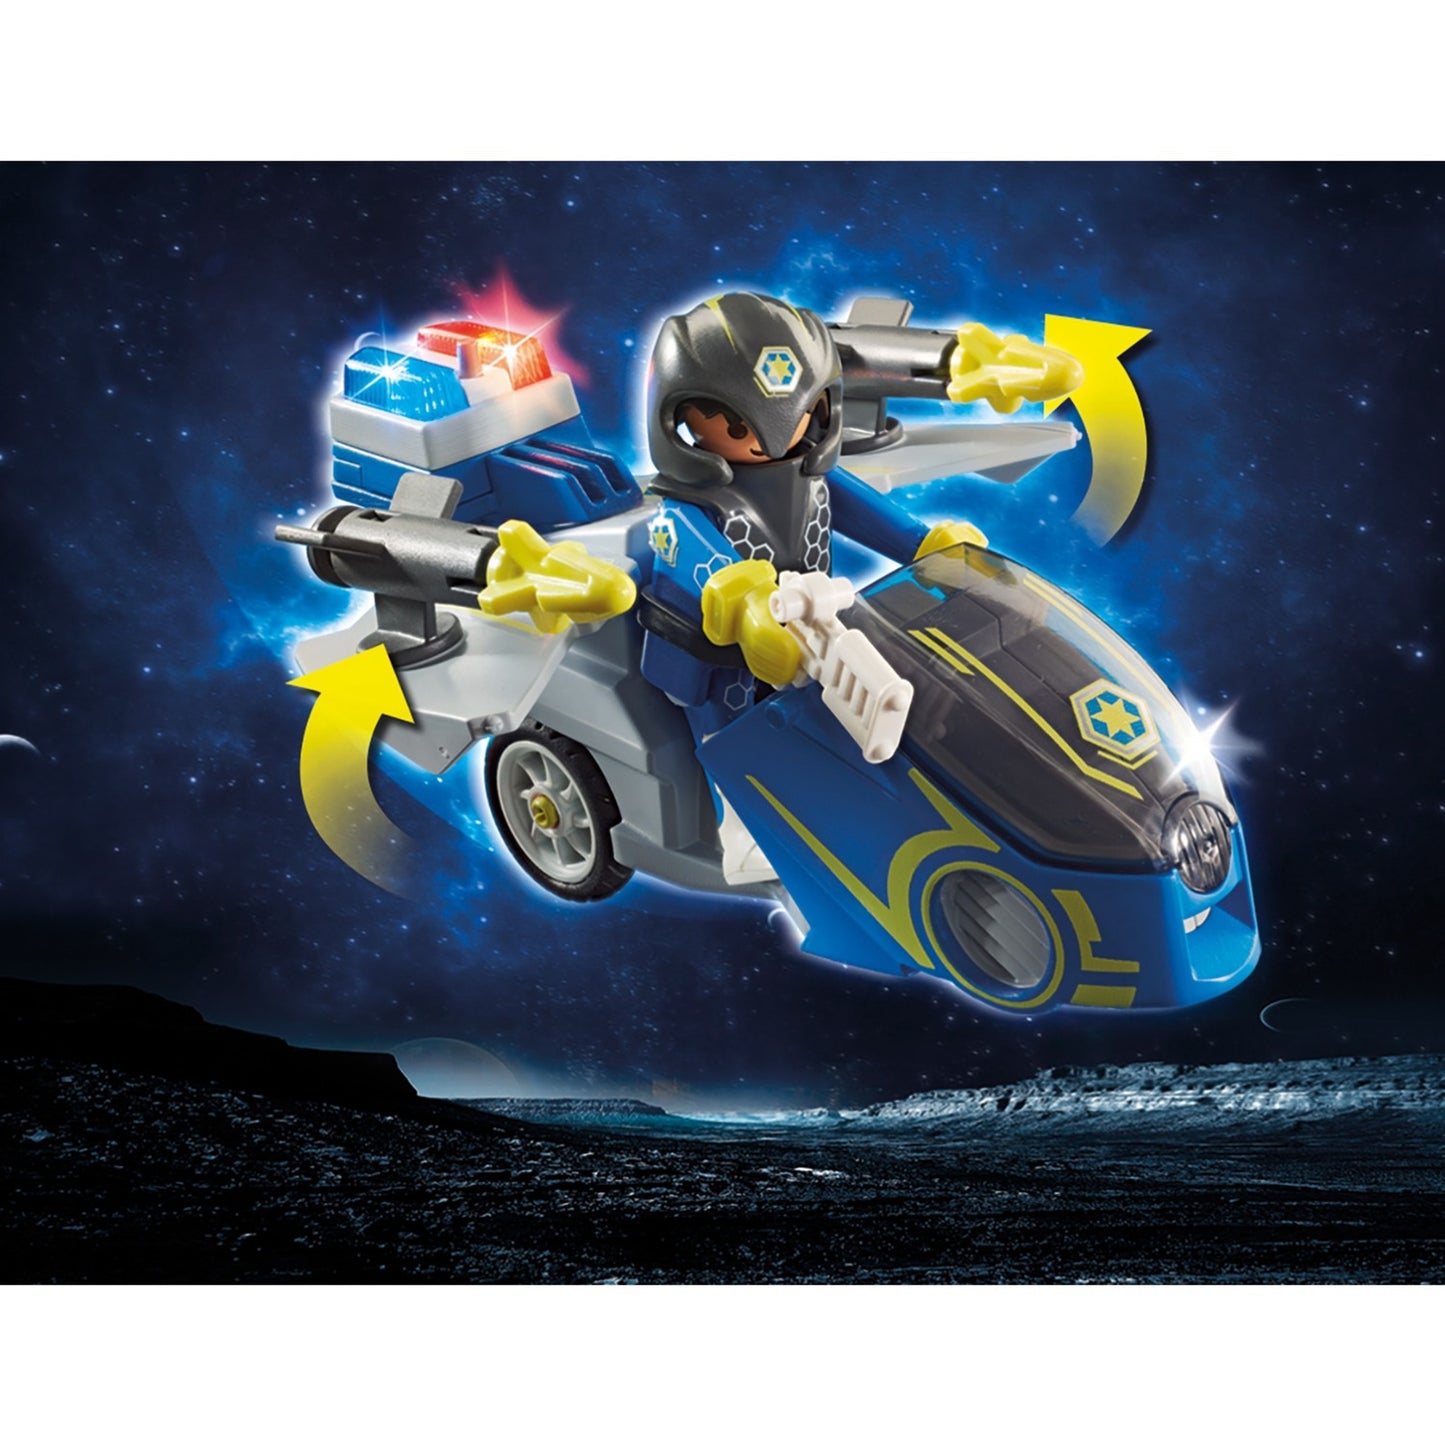 PLAYMOBIL Galaxy Police Galaxy politiemotorfiets